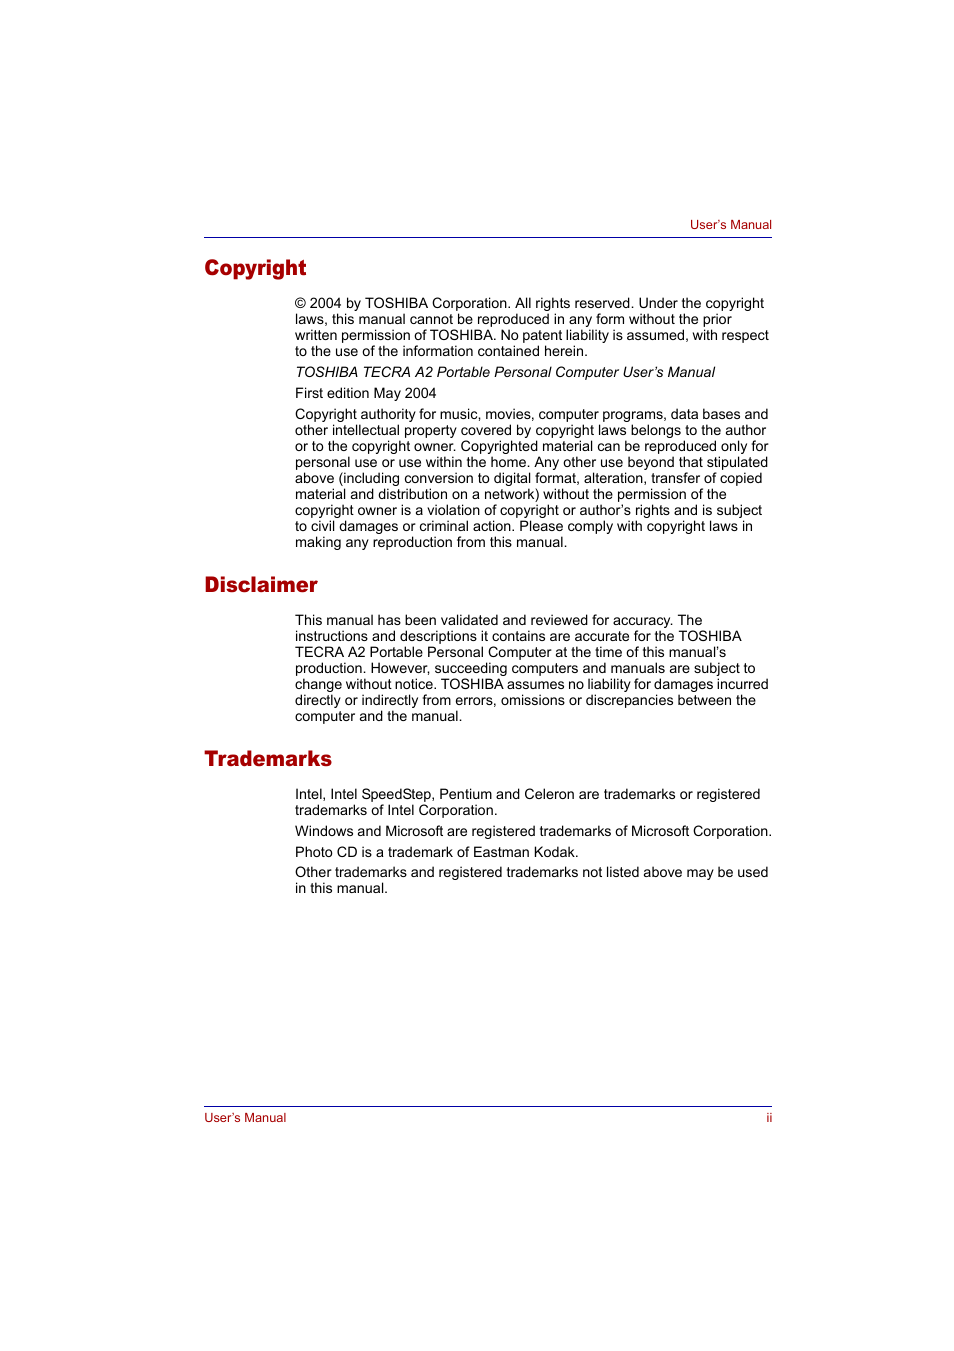 Copyright, Disclaimer, Trademarks | Toshiba Tecra A2 User Manual | Page 2 / 198